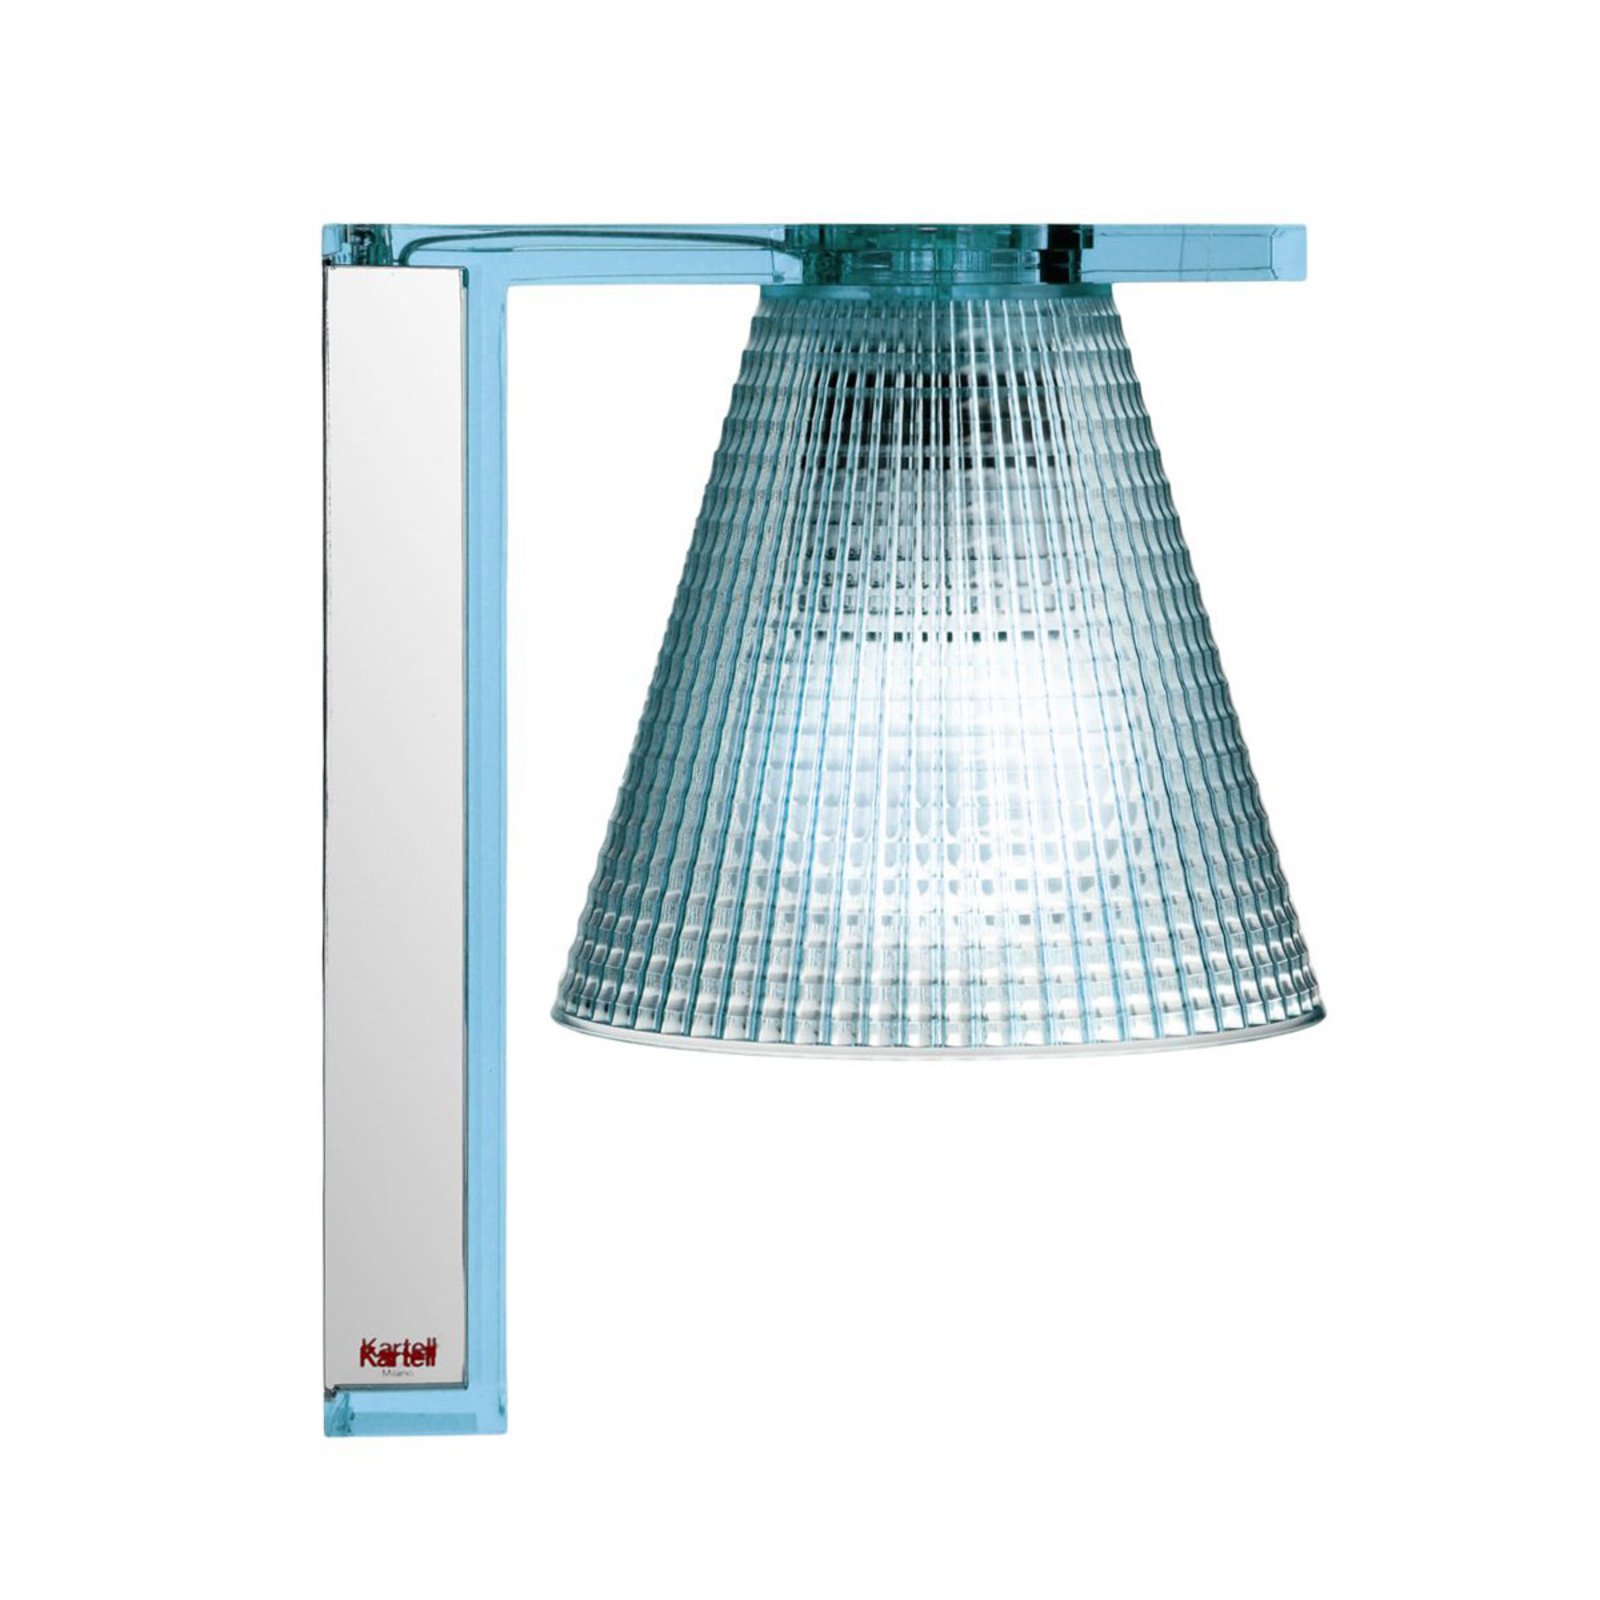 Kartell Light-Air aplique LED, azul